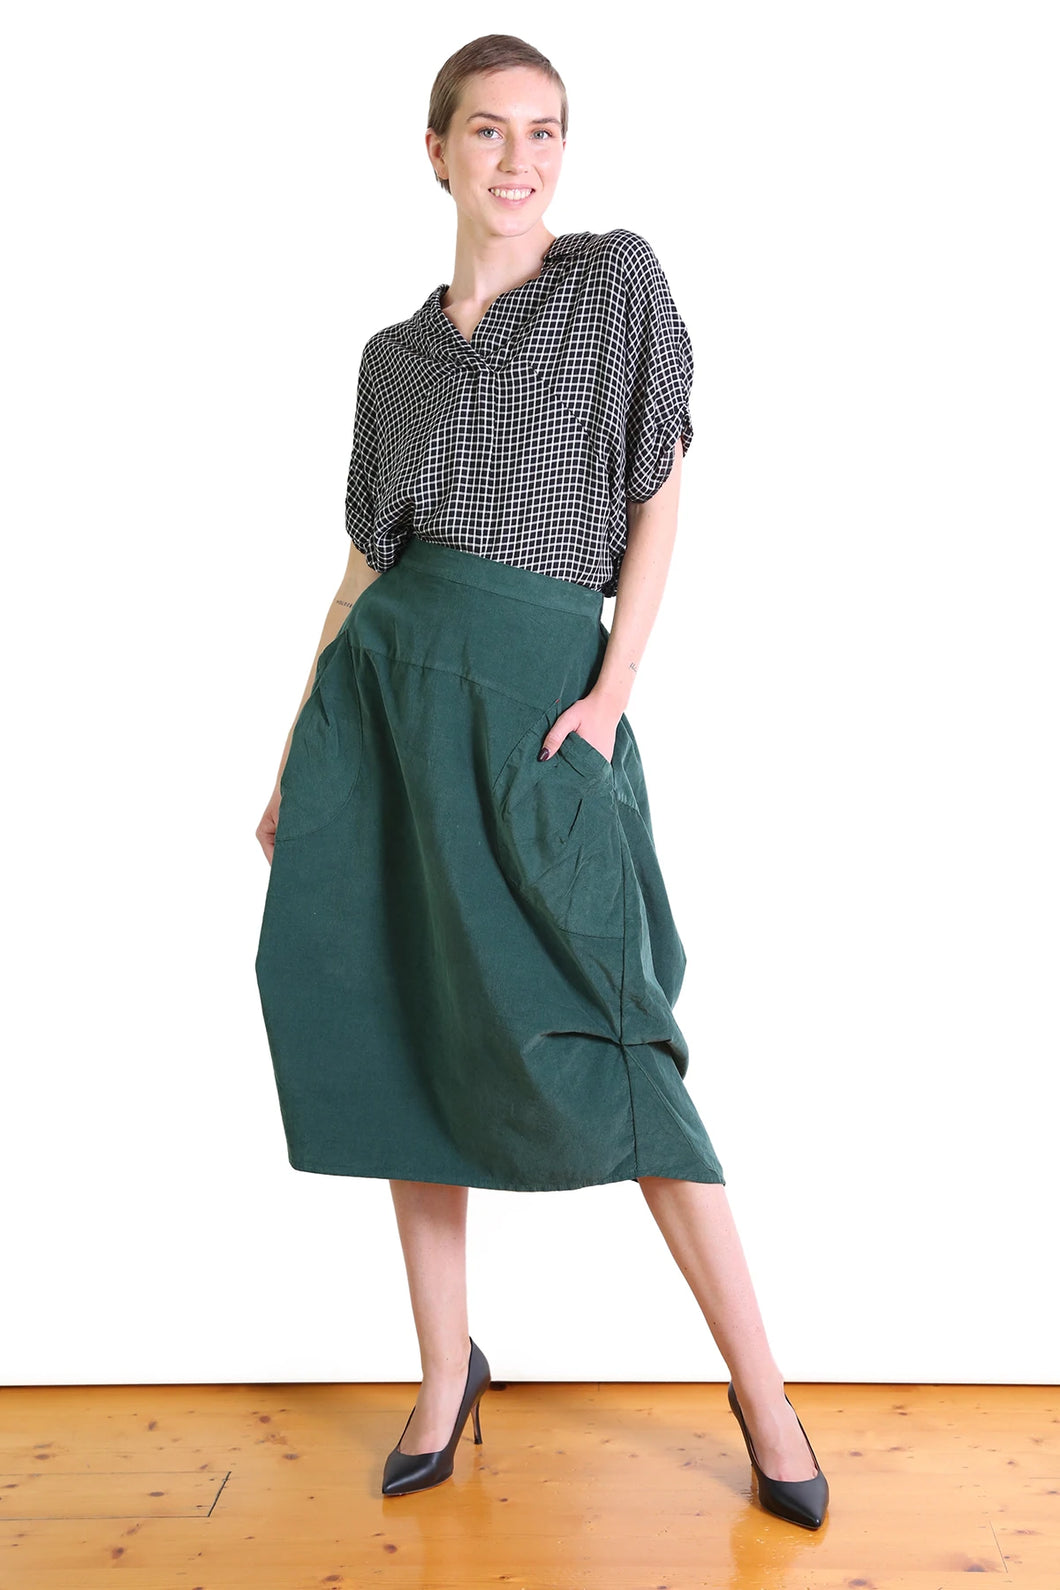 Olga de Polga Milwaukee Bay Skirt Green